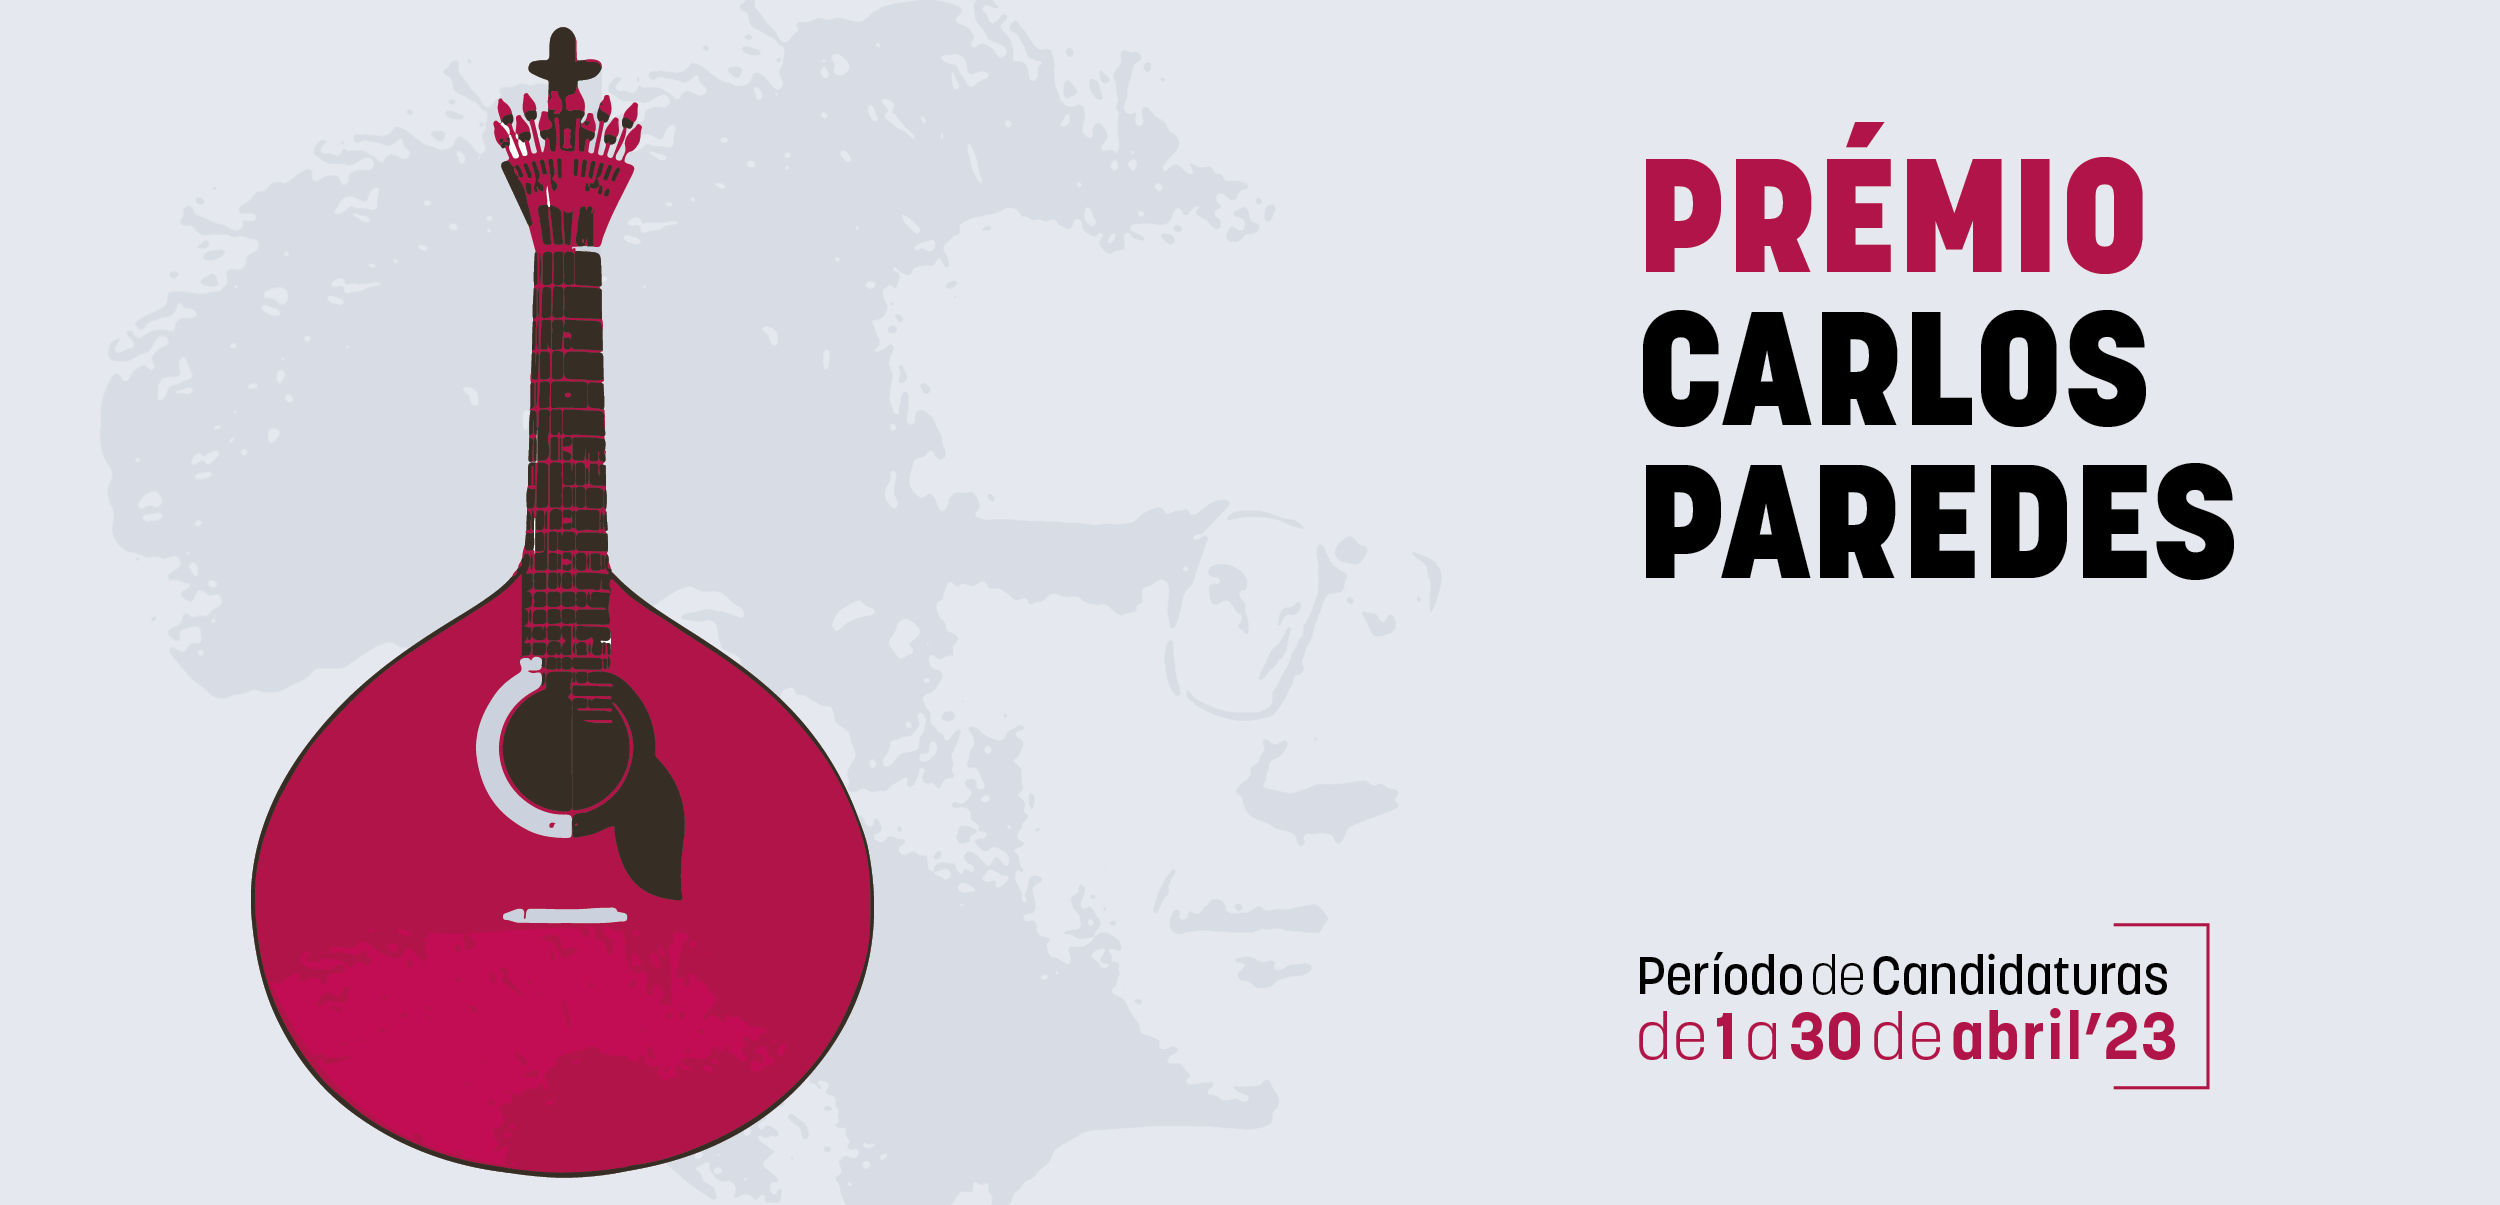 Candidaturas ao Prémio “Carlos Paredes” até ao final de abril